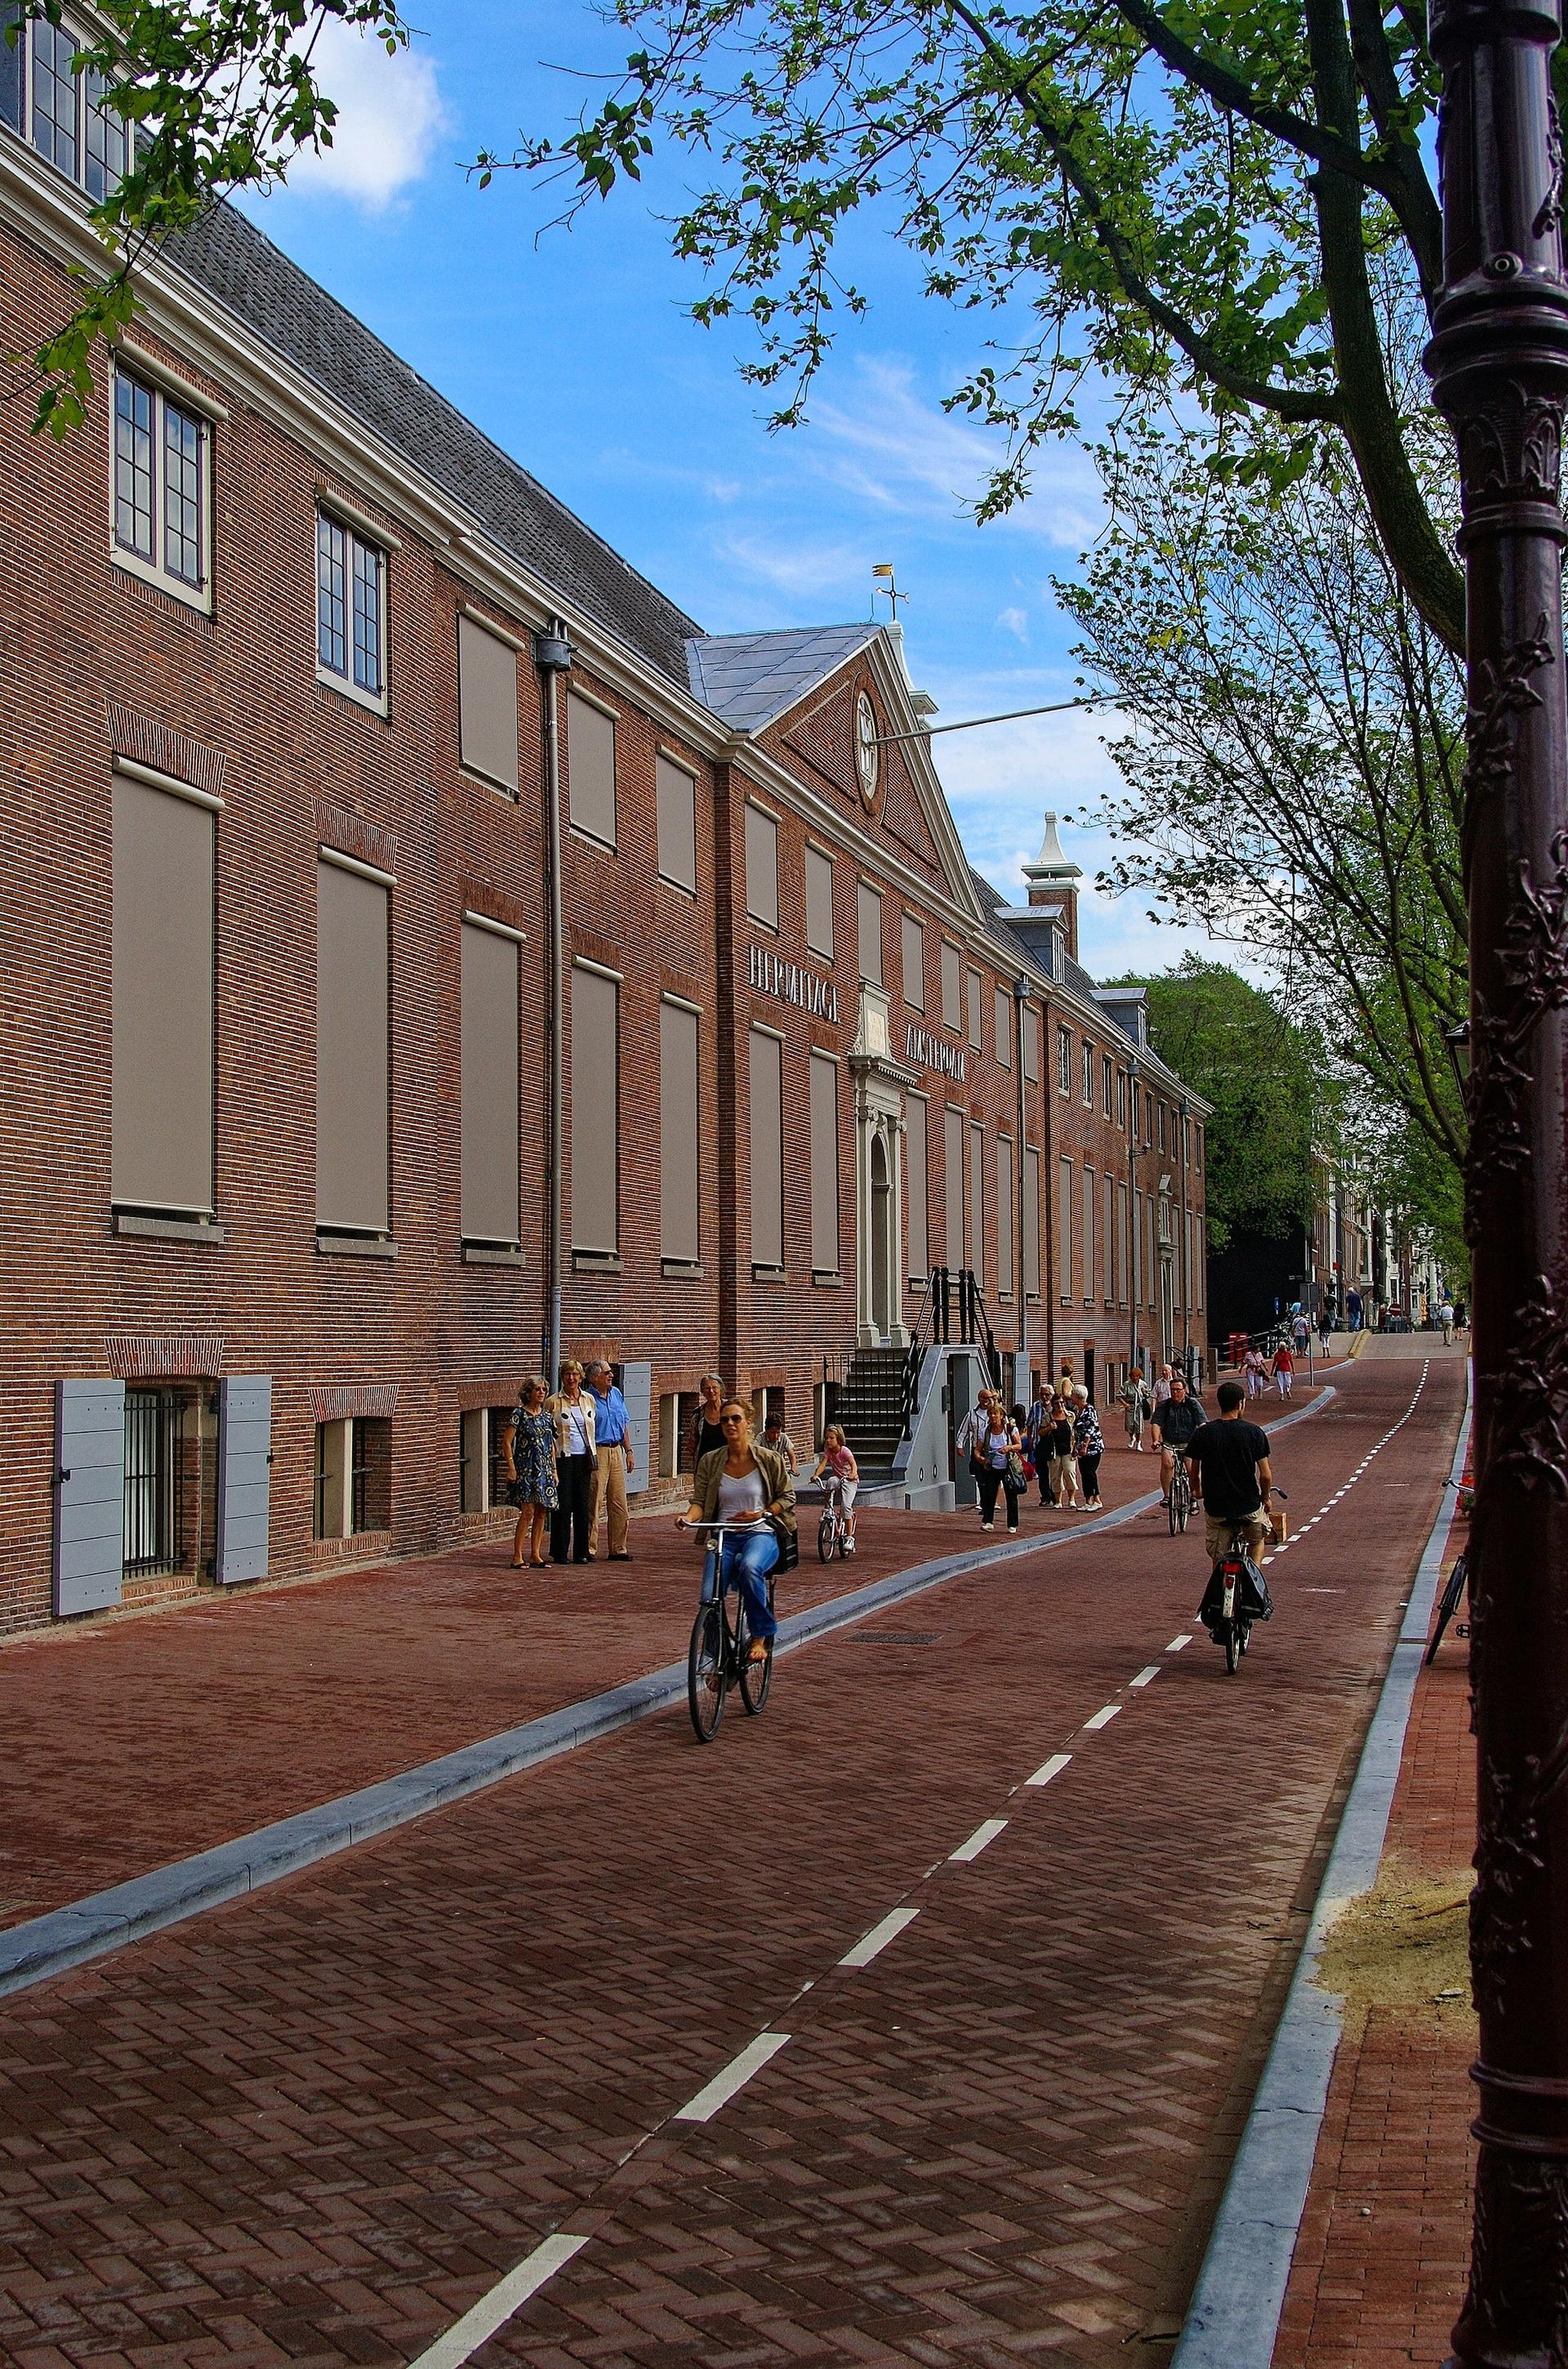 The new Dutch Heritage Amsterdam will exhibit "Dutch favourites" Photo: Txllxt TxllxT